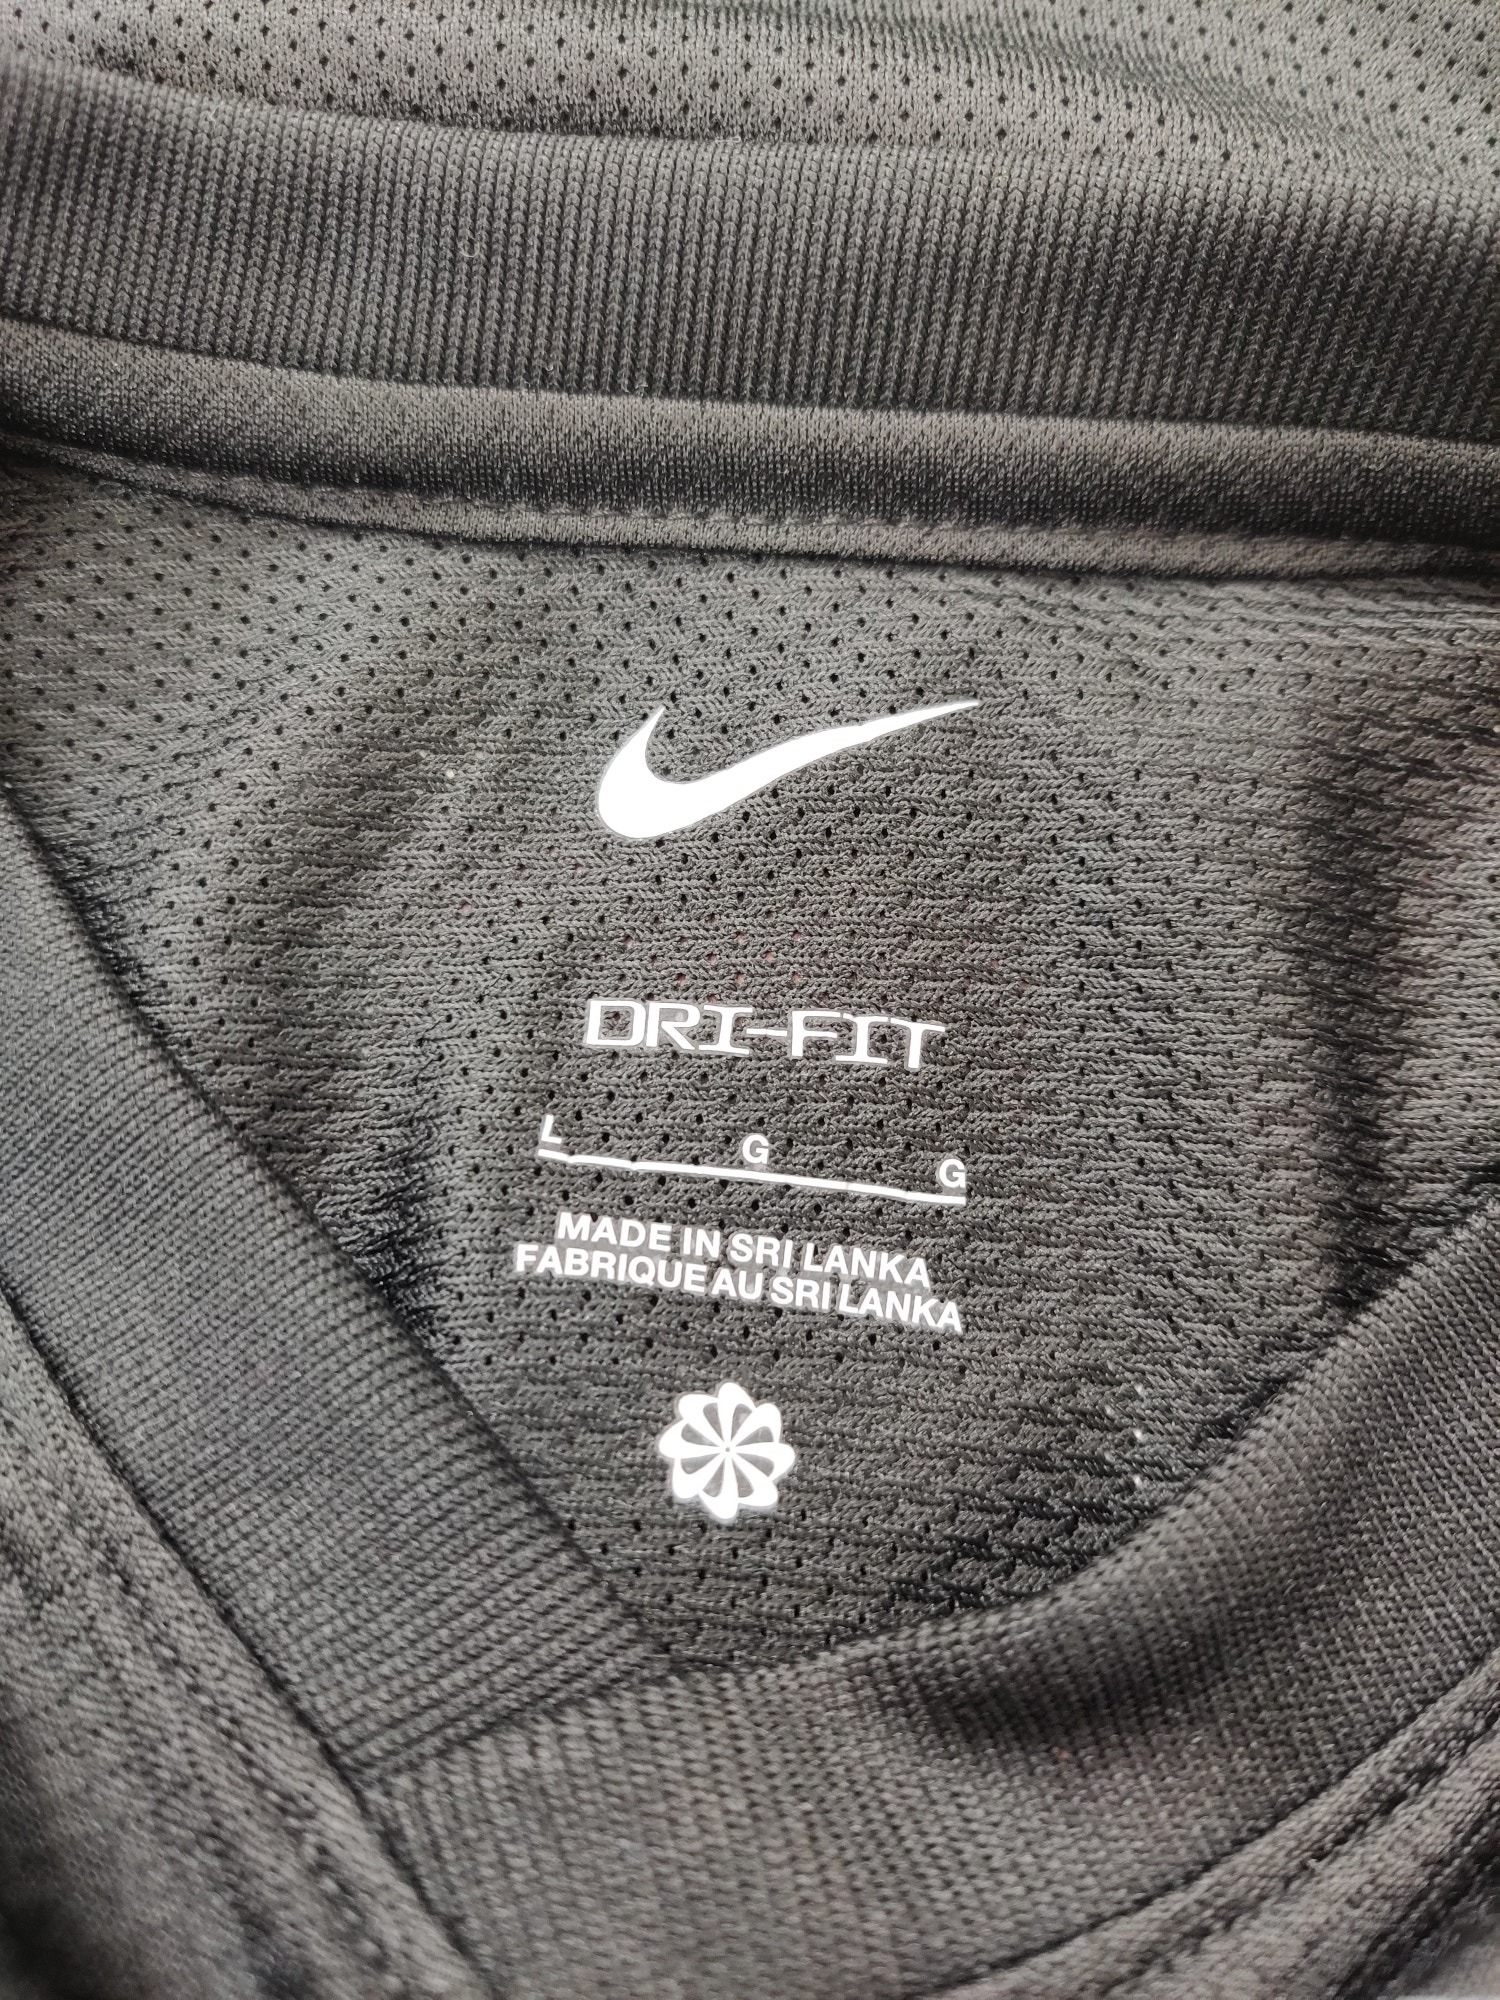 (V) NEW Nike Dri-Fit Kids shirt soccer jersey sport Seacoast United #5 sz M - Picture 6 of 9